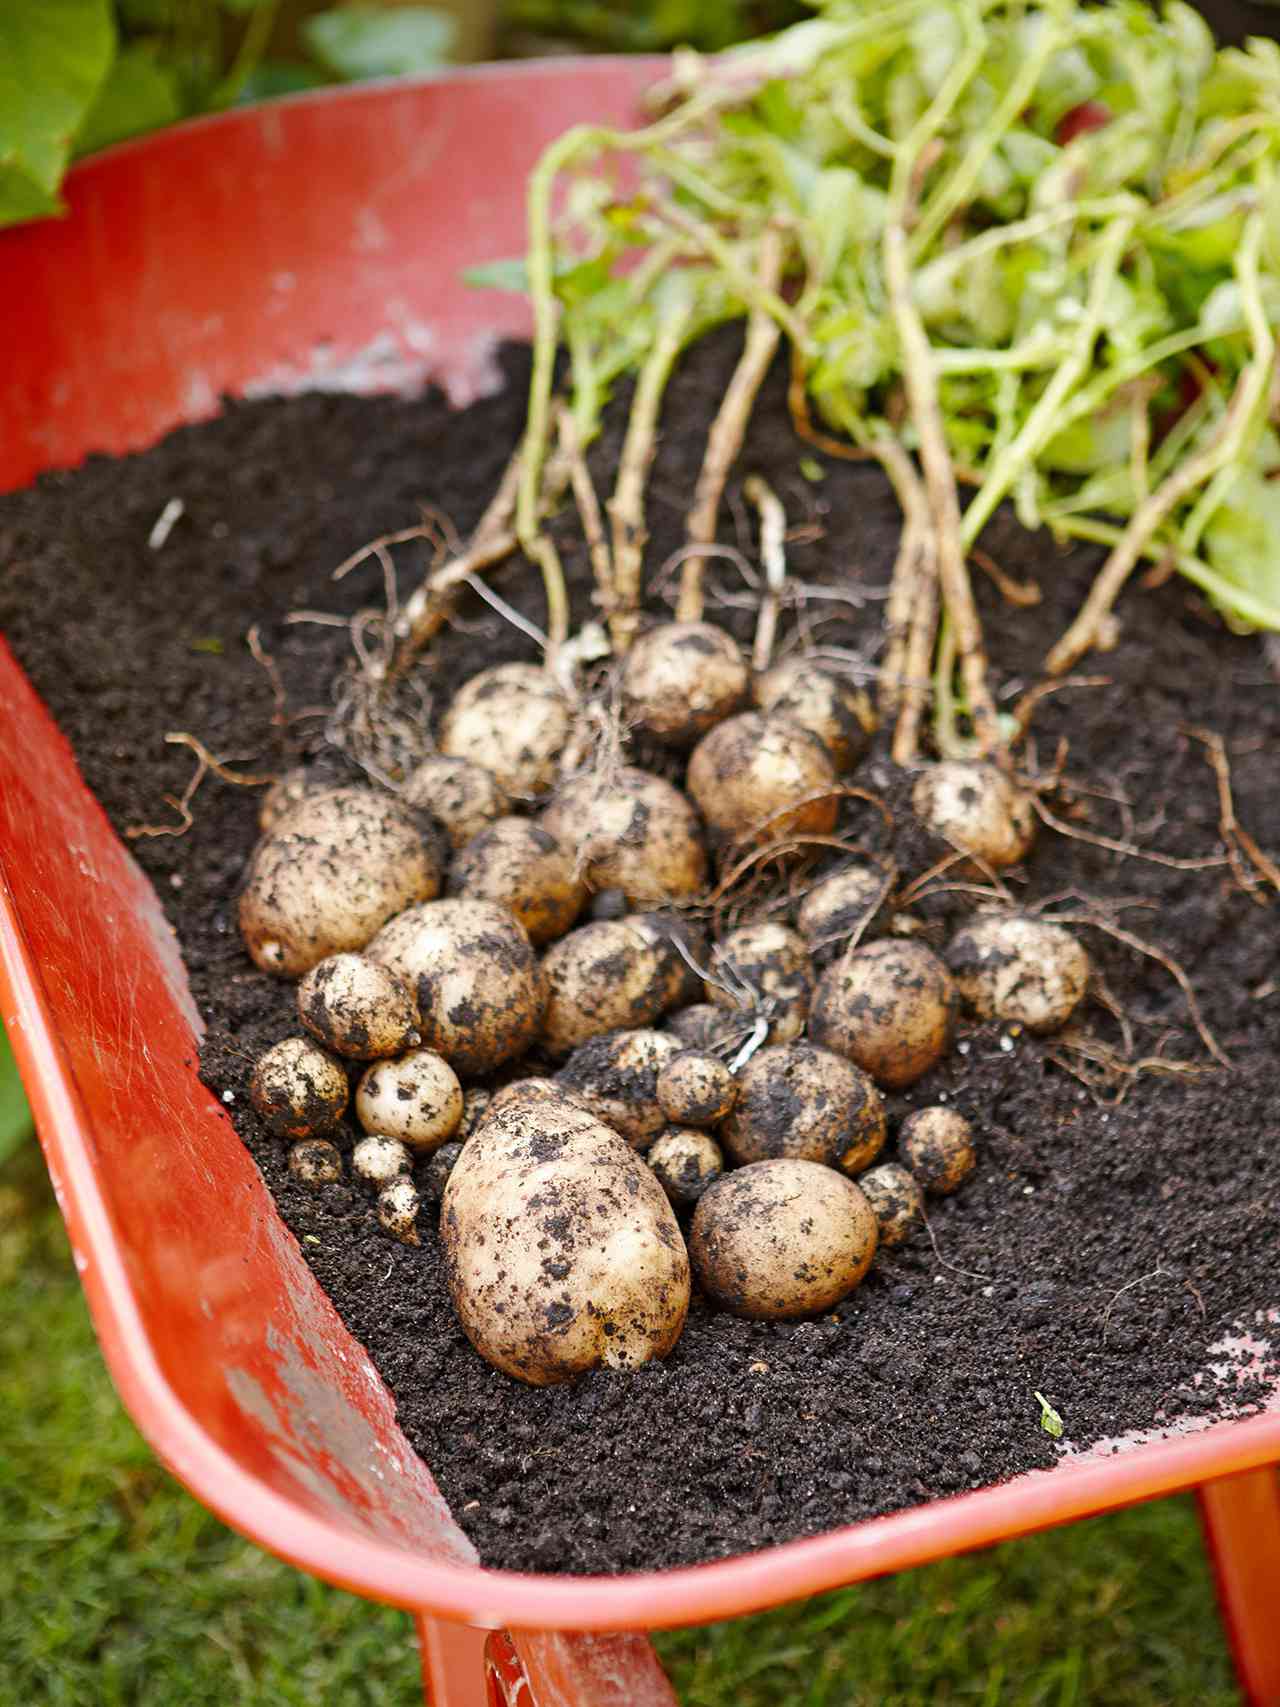 How to start potat plants indoors